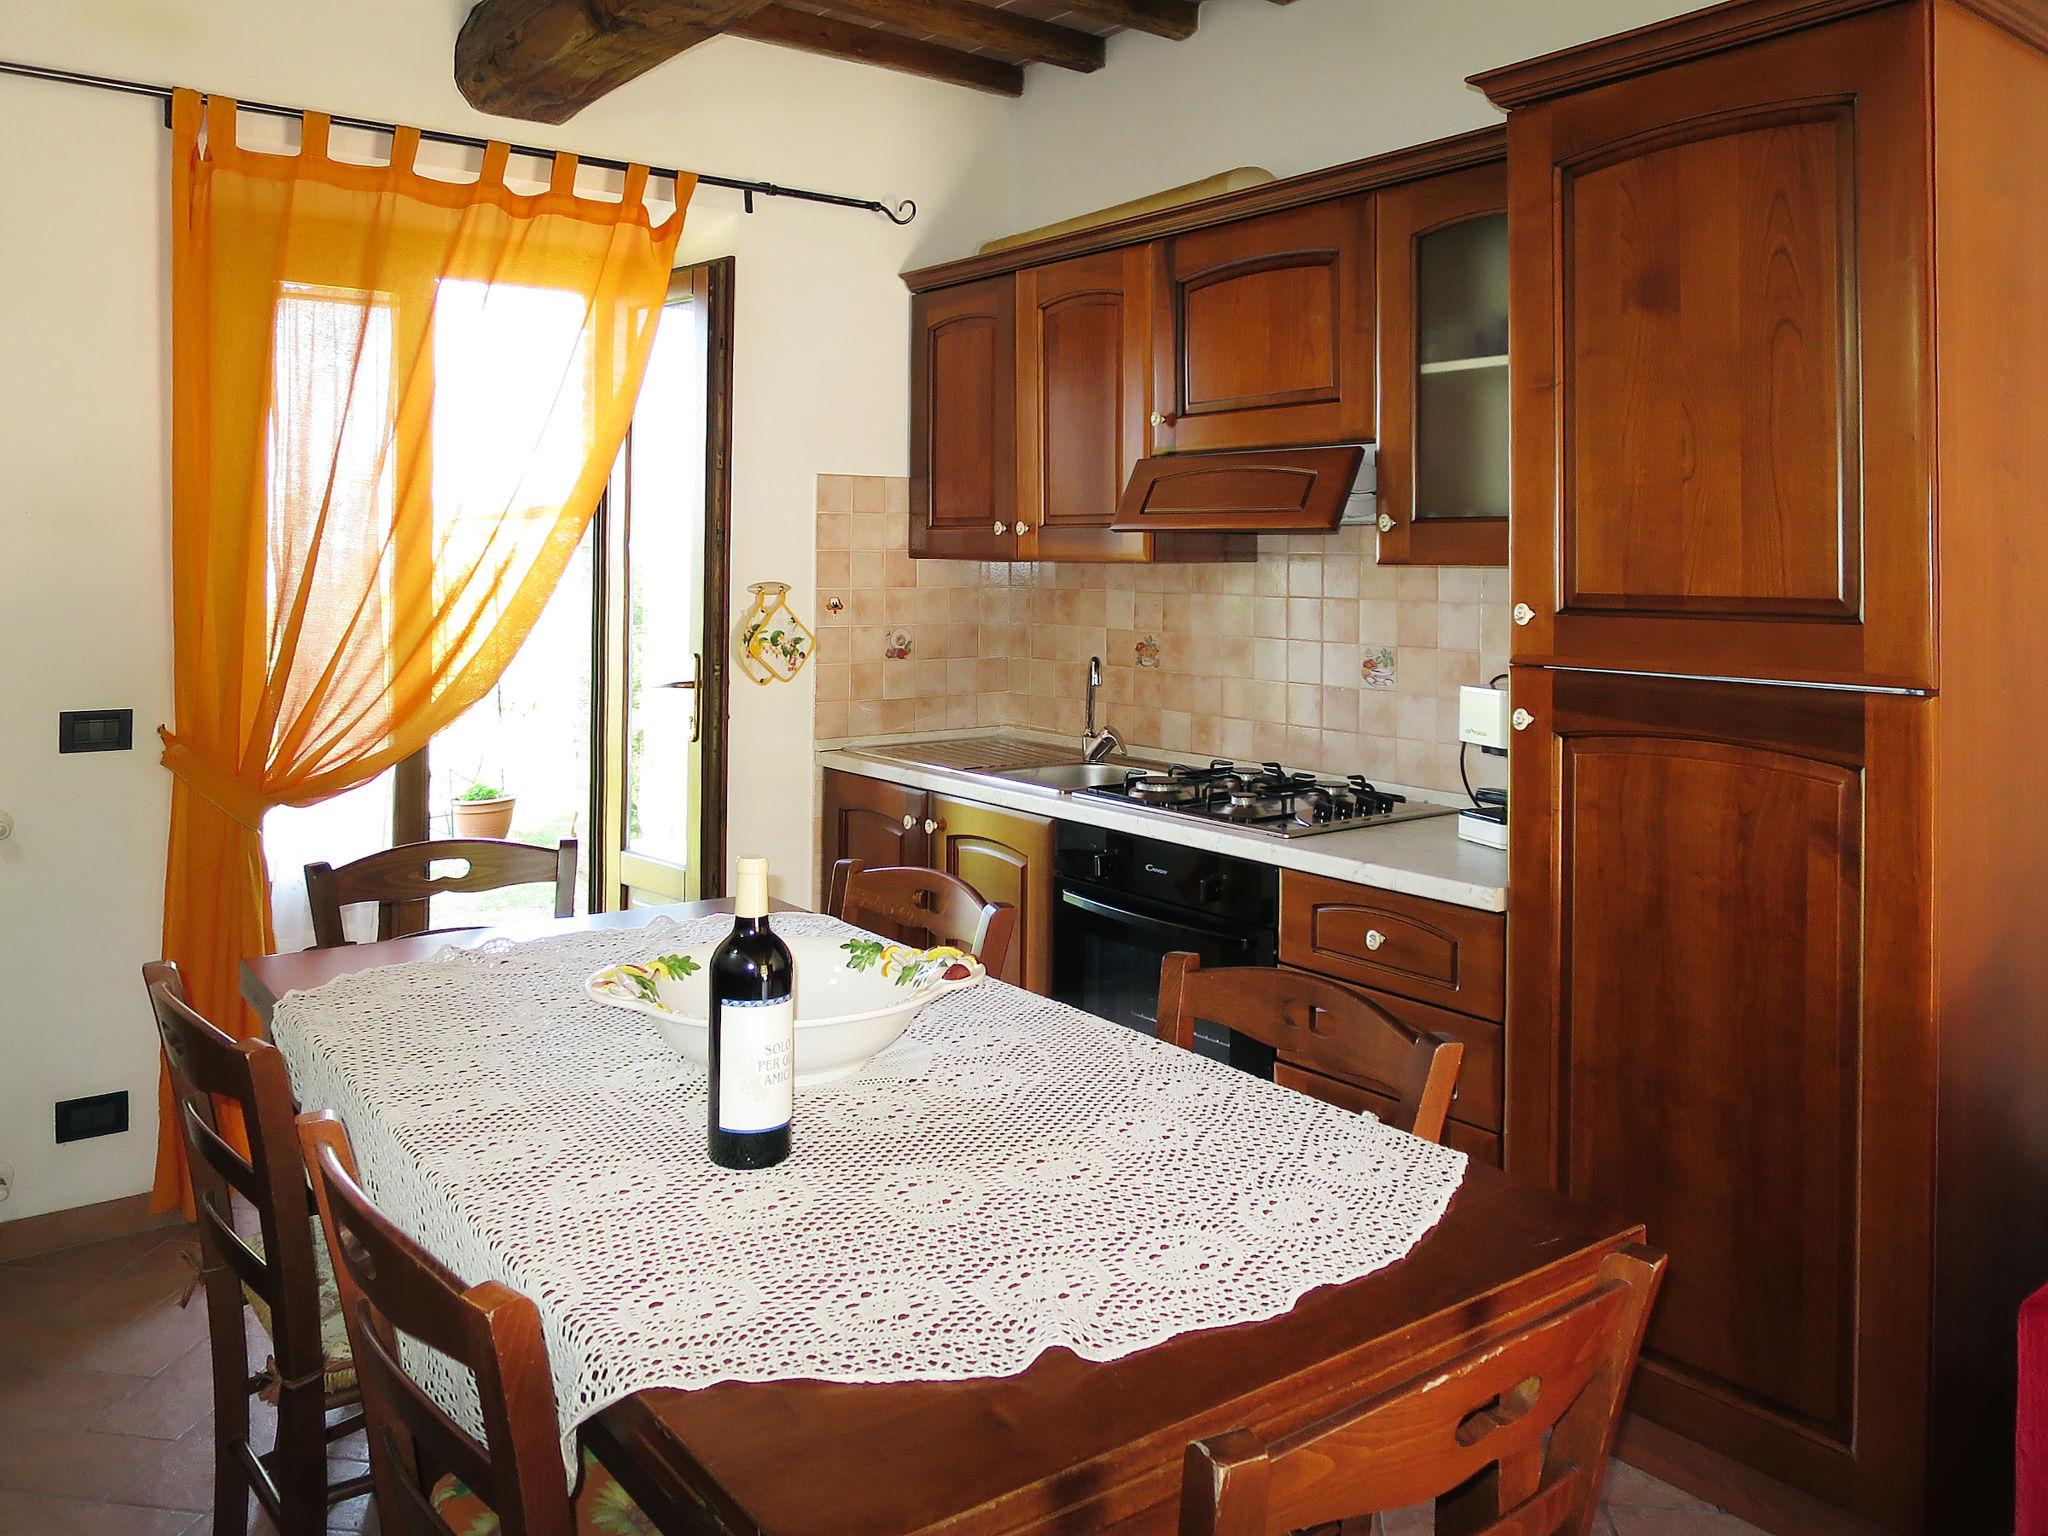 Photo 8 - Appartement de 3 chambres à Castelnuovo di Val di Cecina avec piscine et jardin